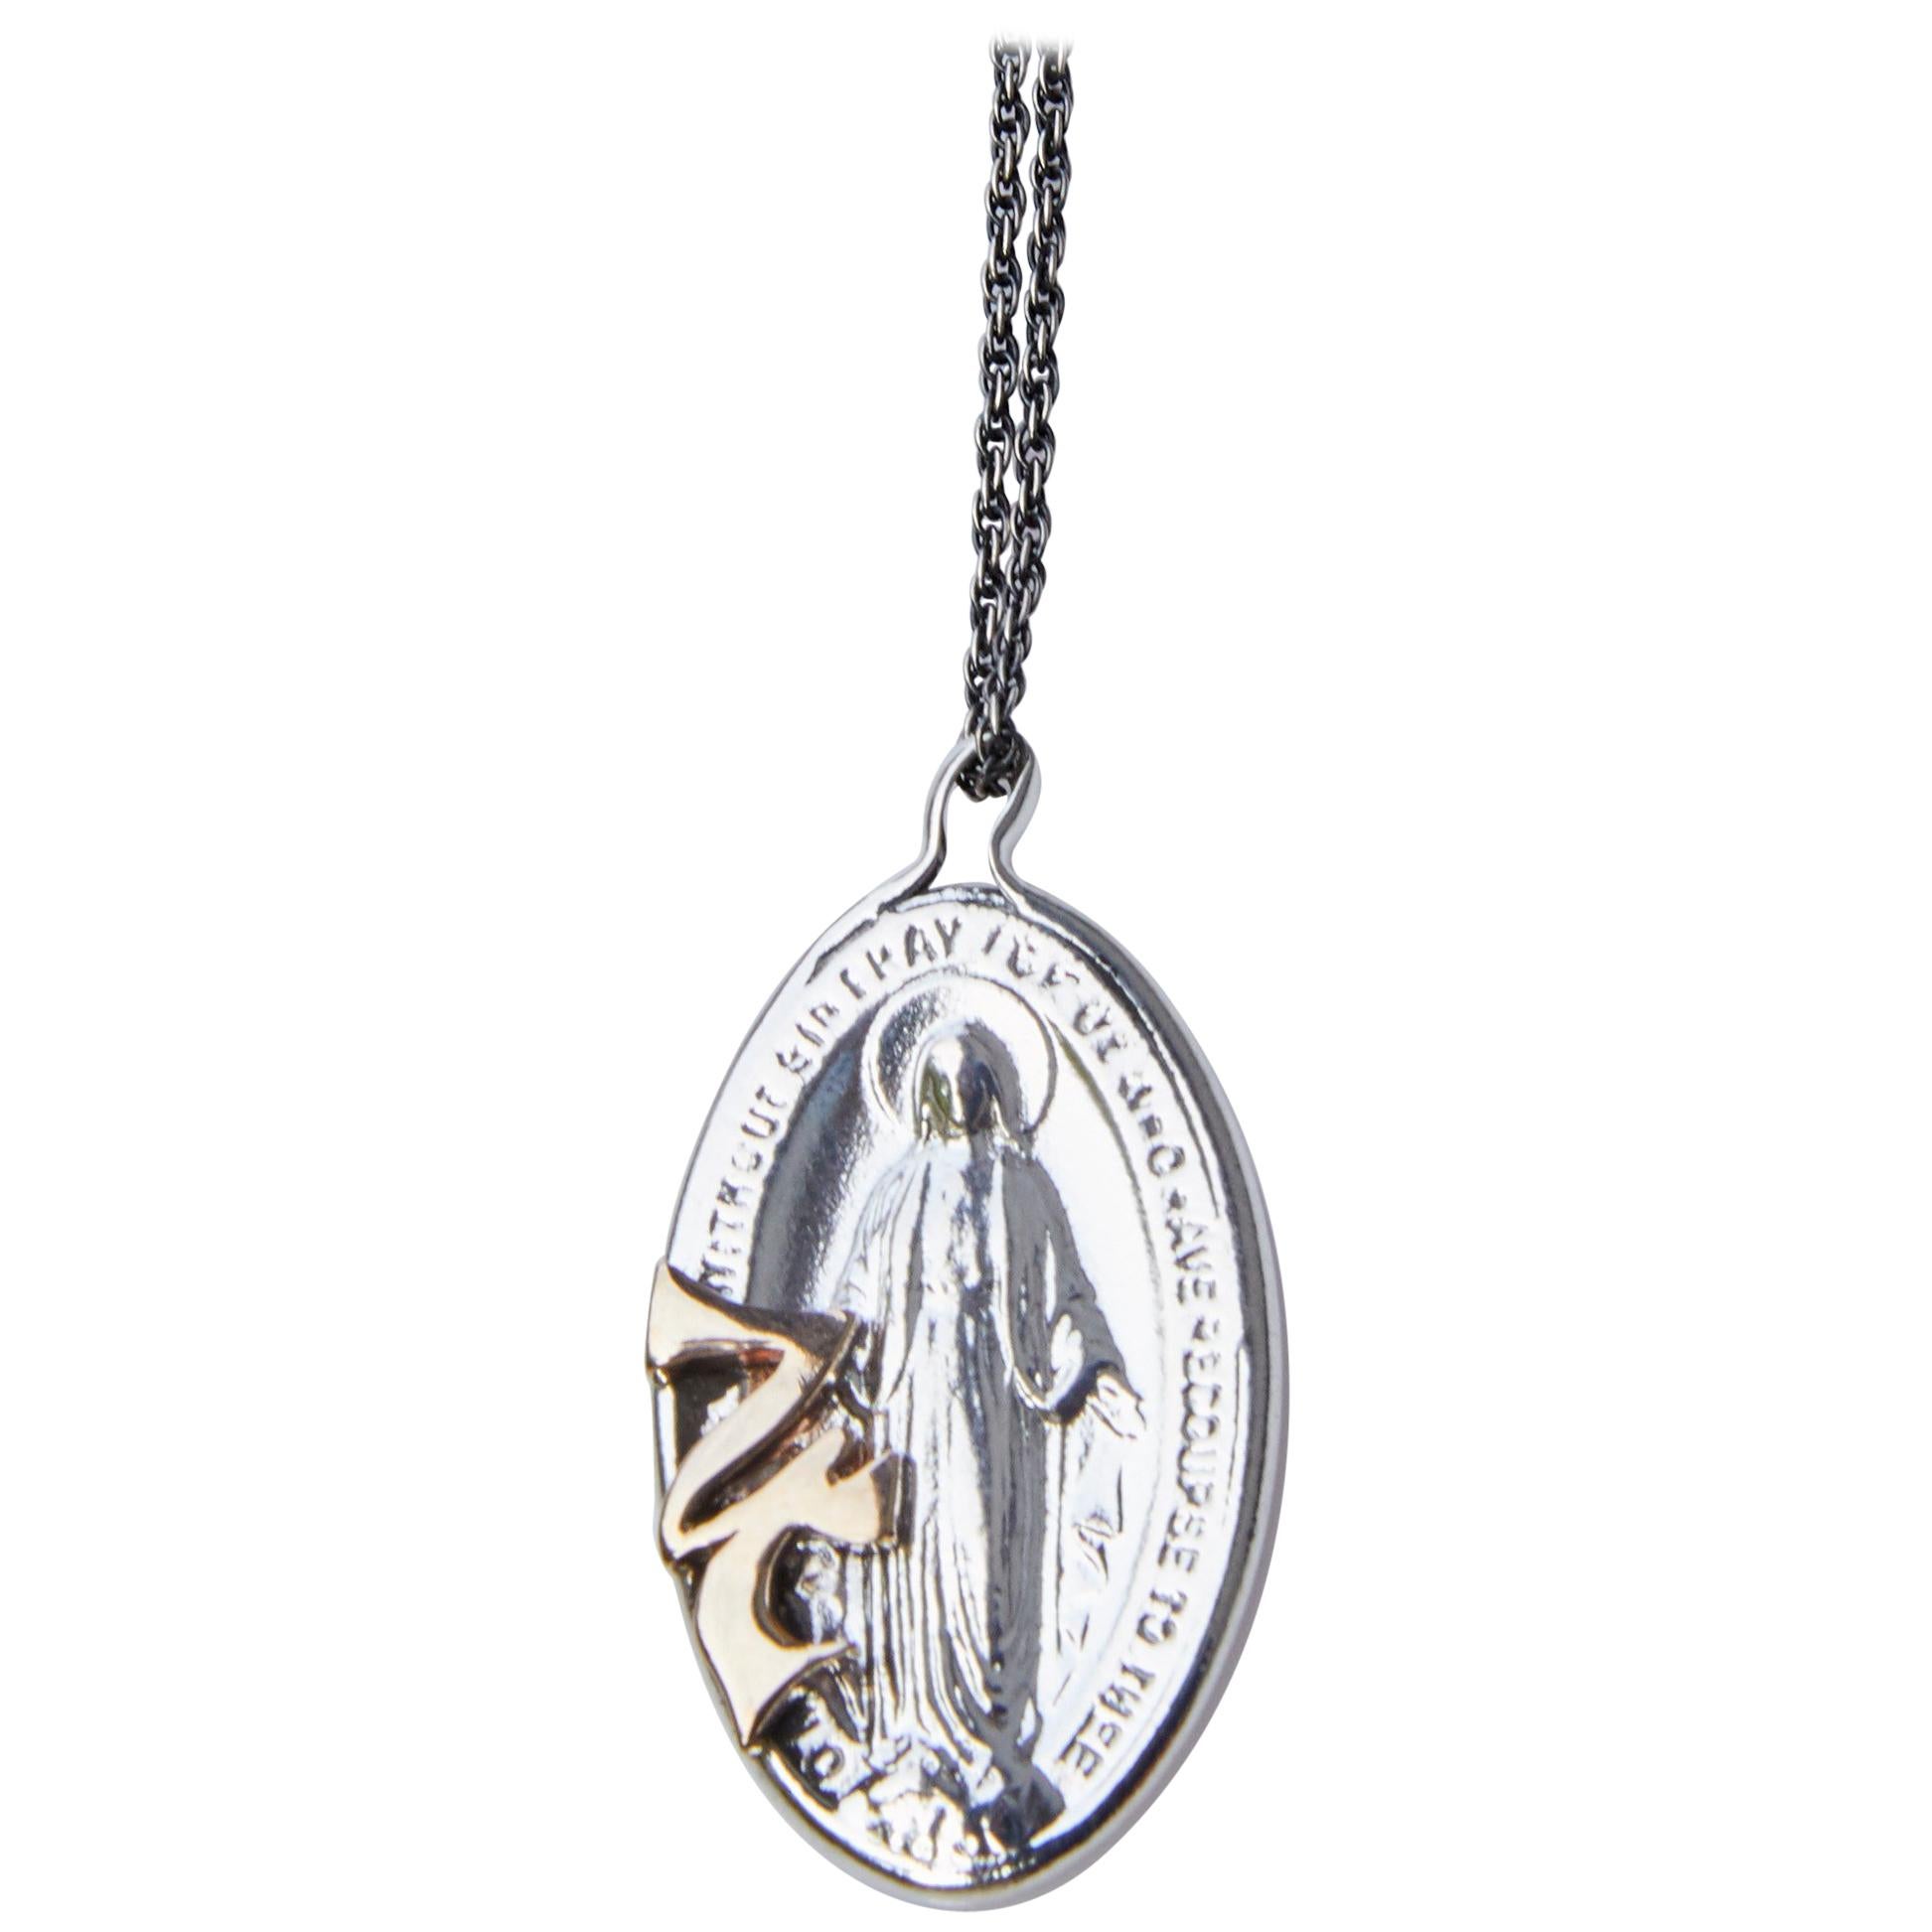 Die Jungfrau Maria Medaille Oval Jupiter Halskette Gold Silber J Dauphin im Angebot